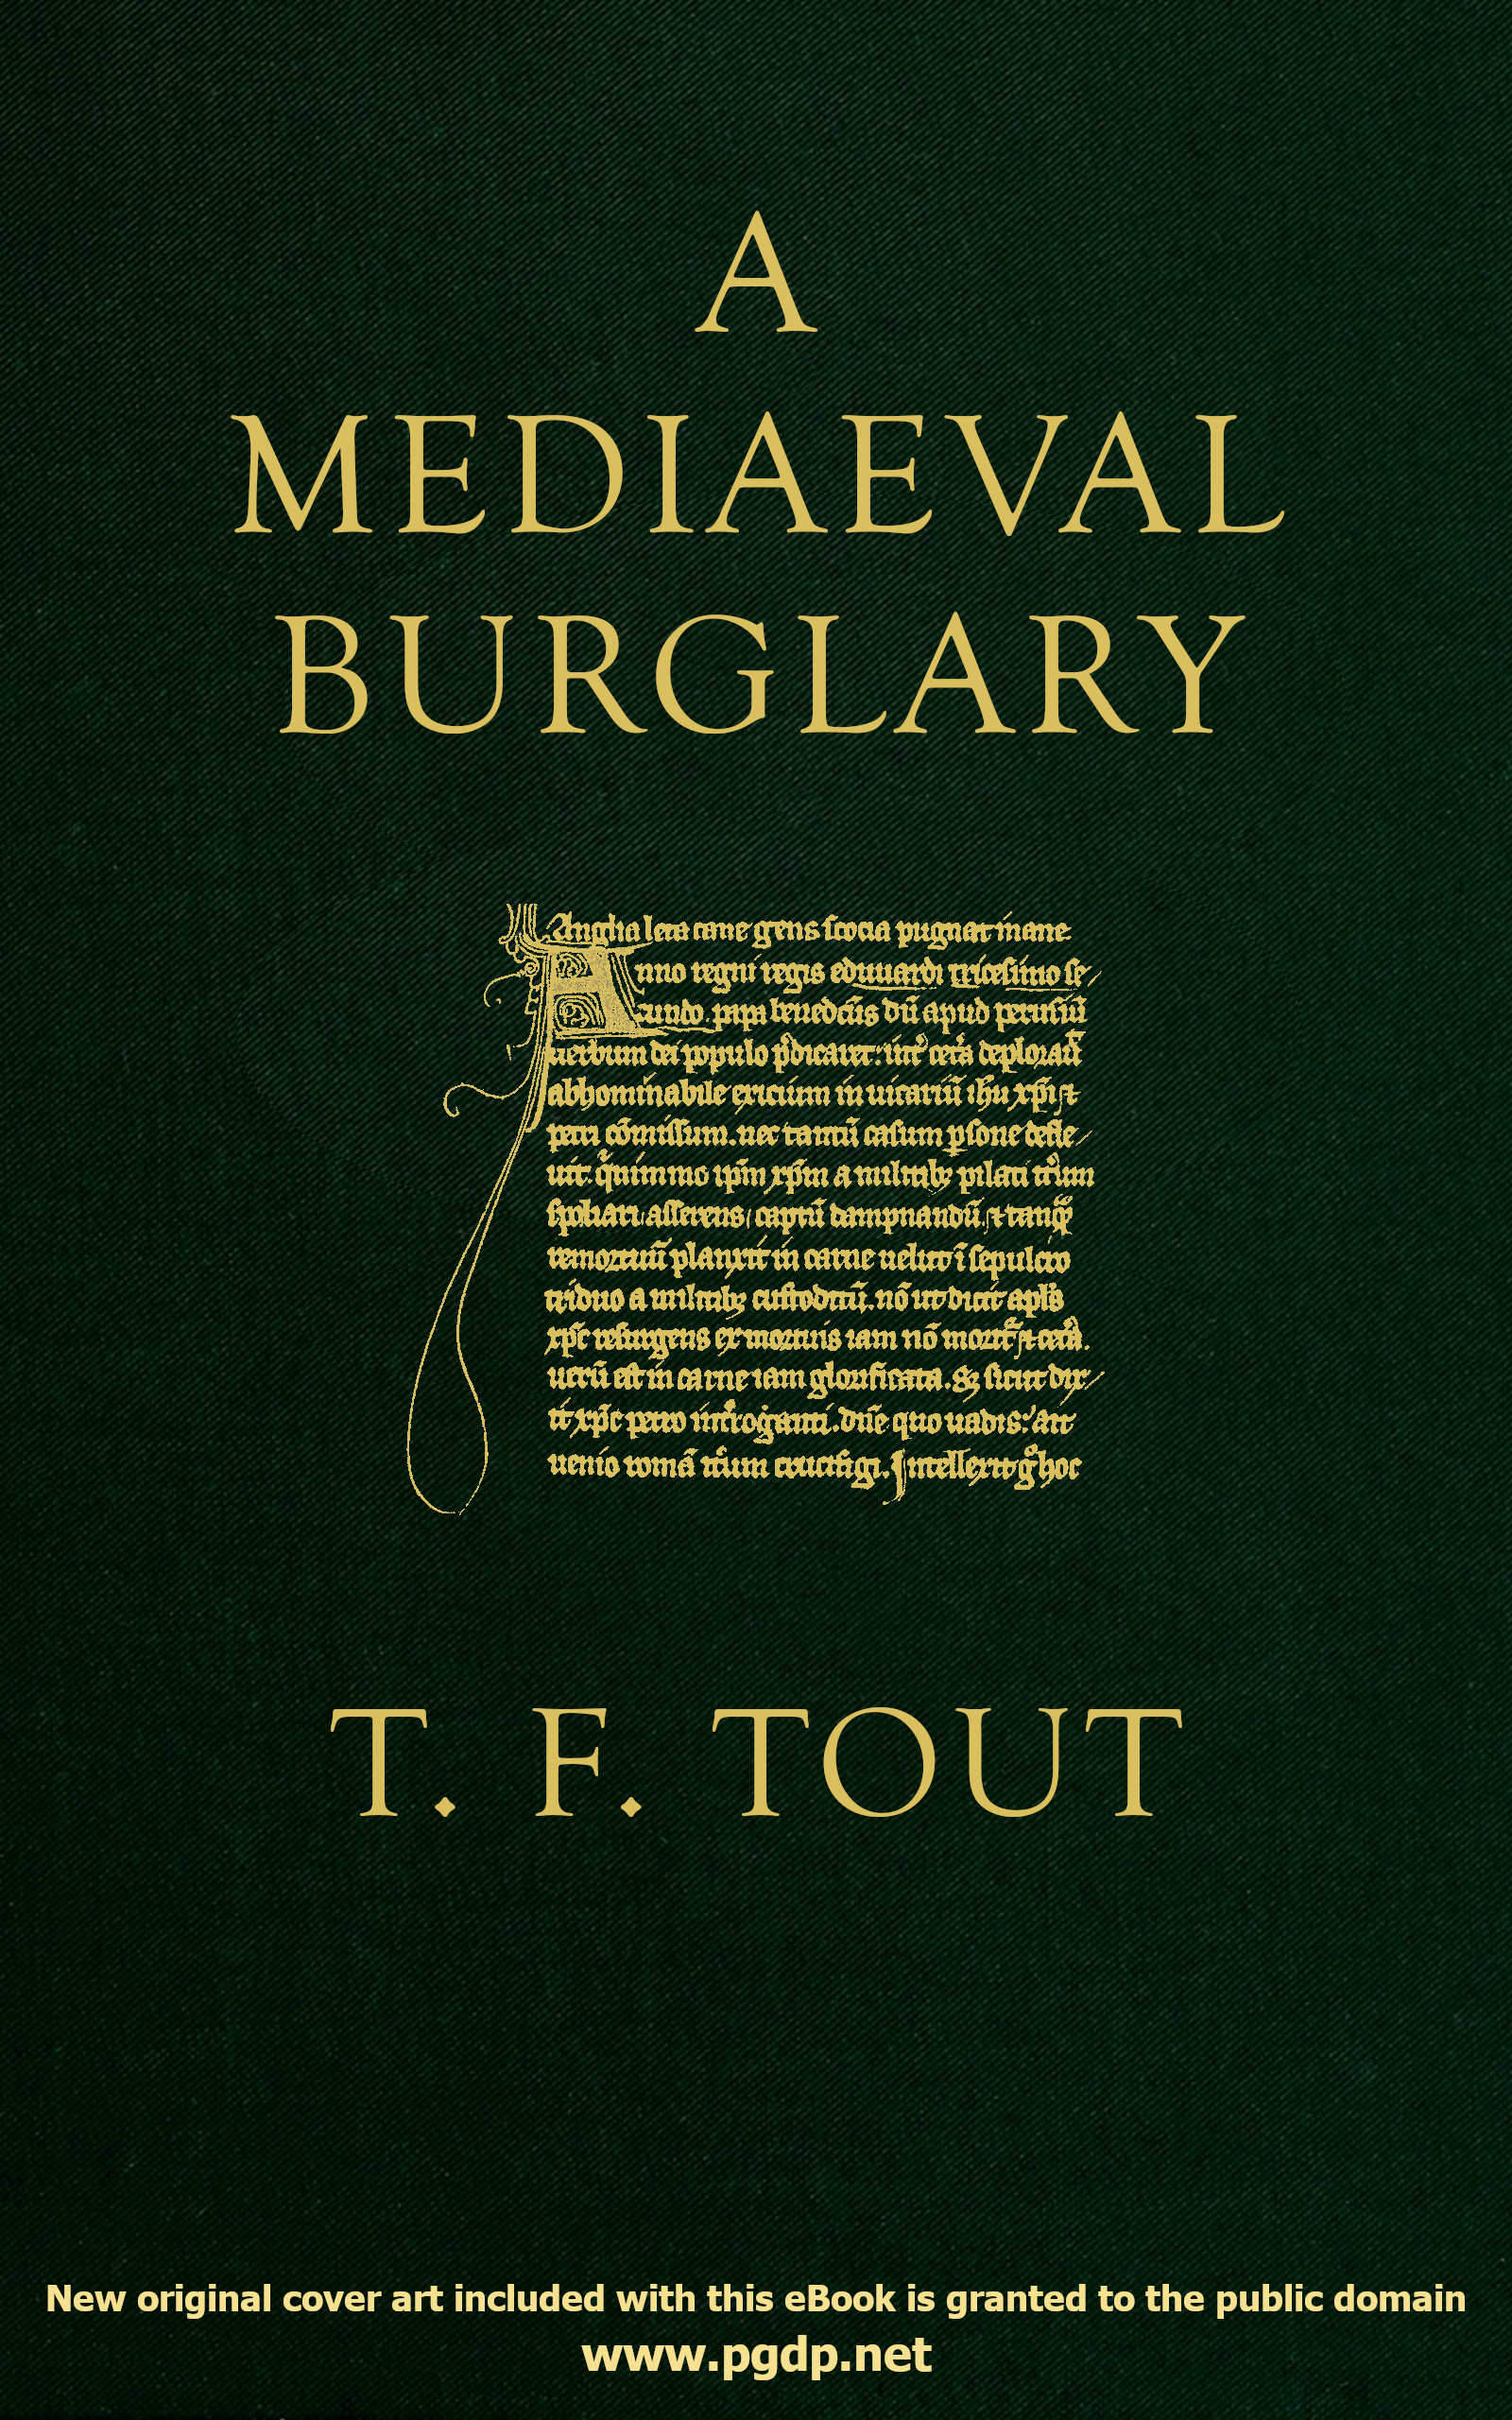 A mediaeval burglary